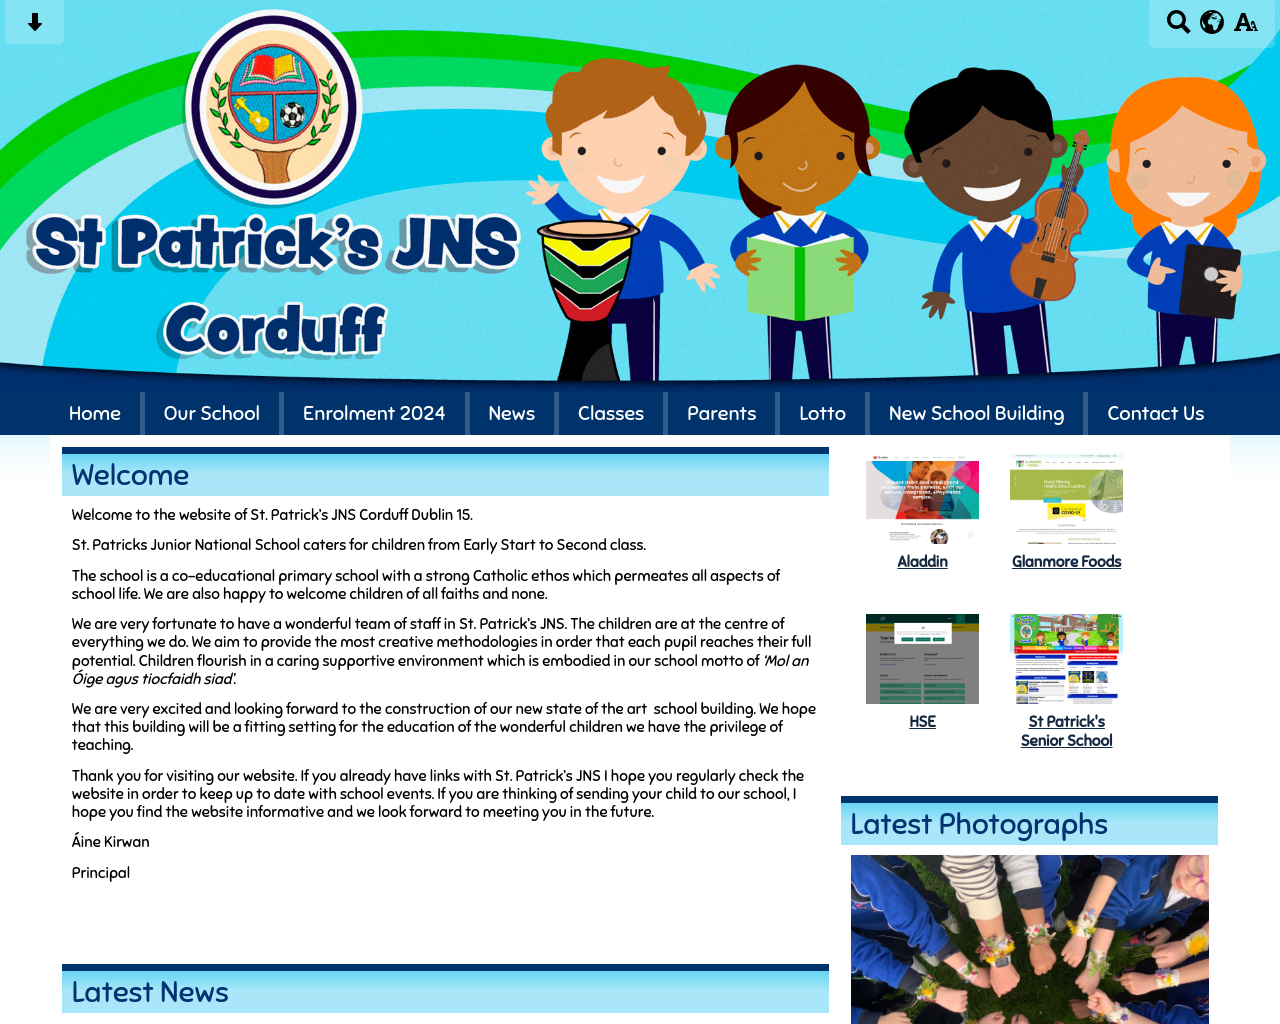 St. Patrick's Junior National School